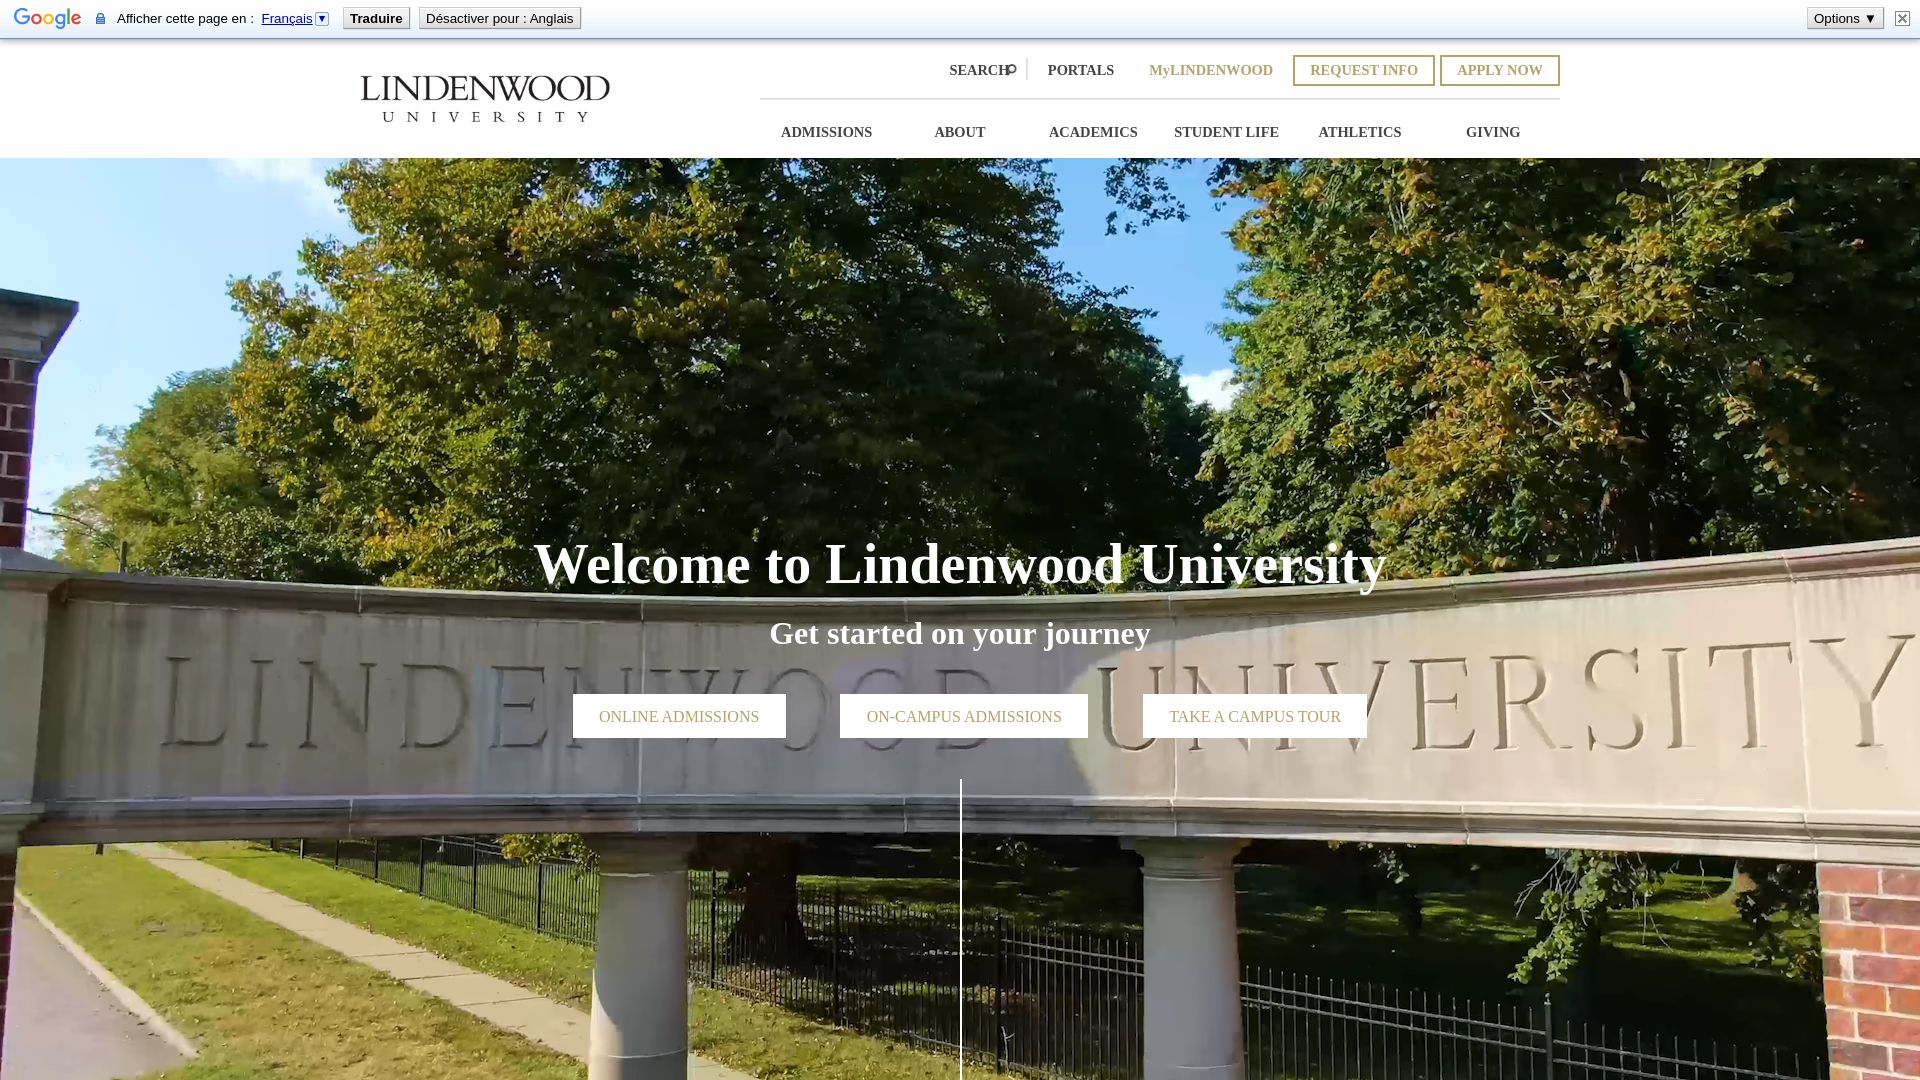 Website status lindenwood.edu is   ONLINE